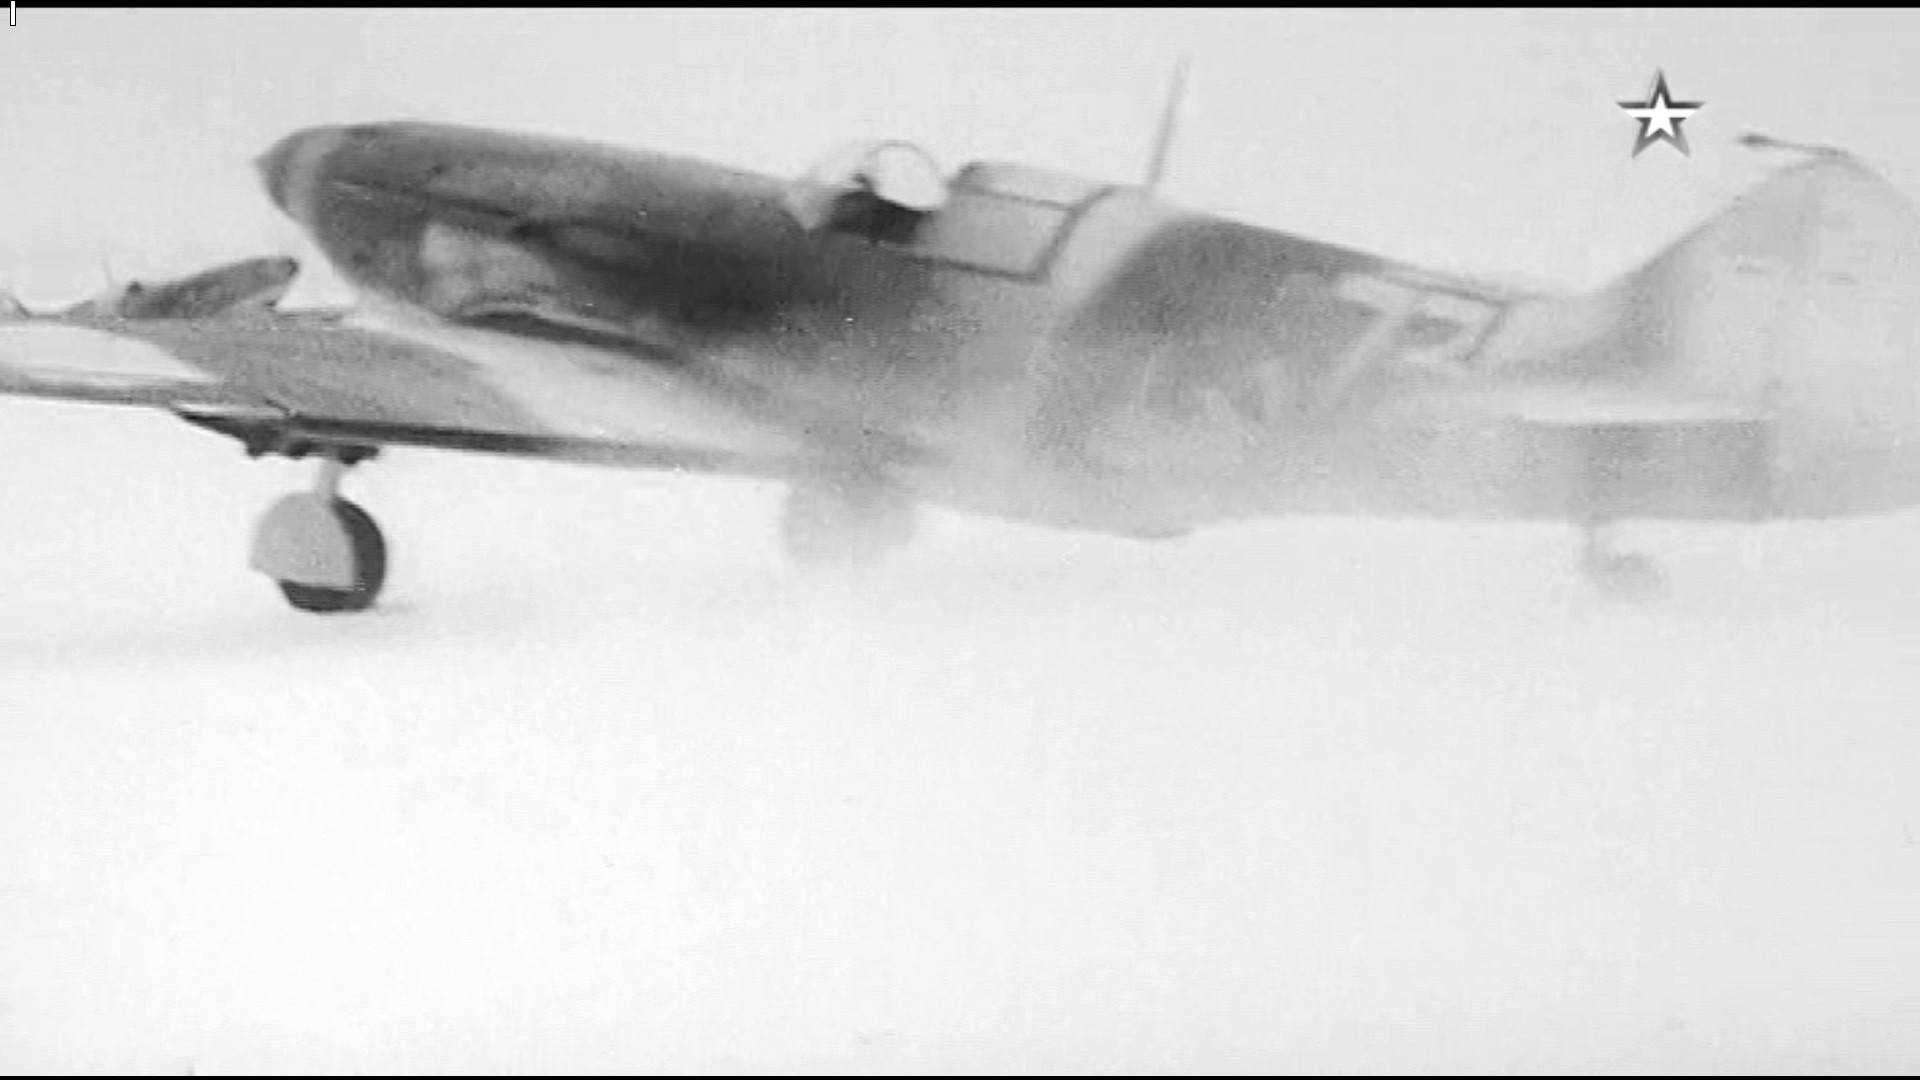 LaGG-3 plane tactical number 73 winter camo 609 IAP VVS KA WWII photo